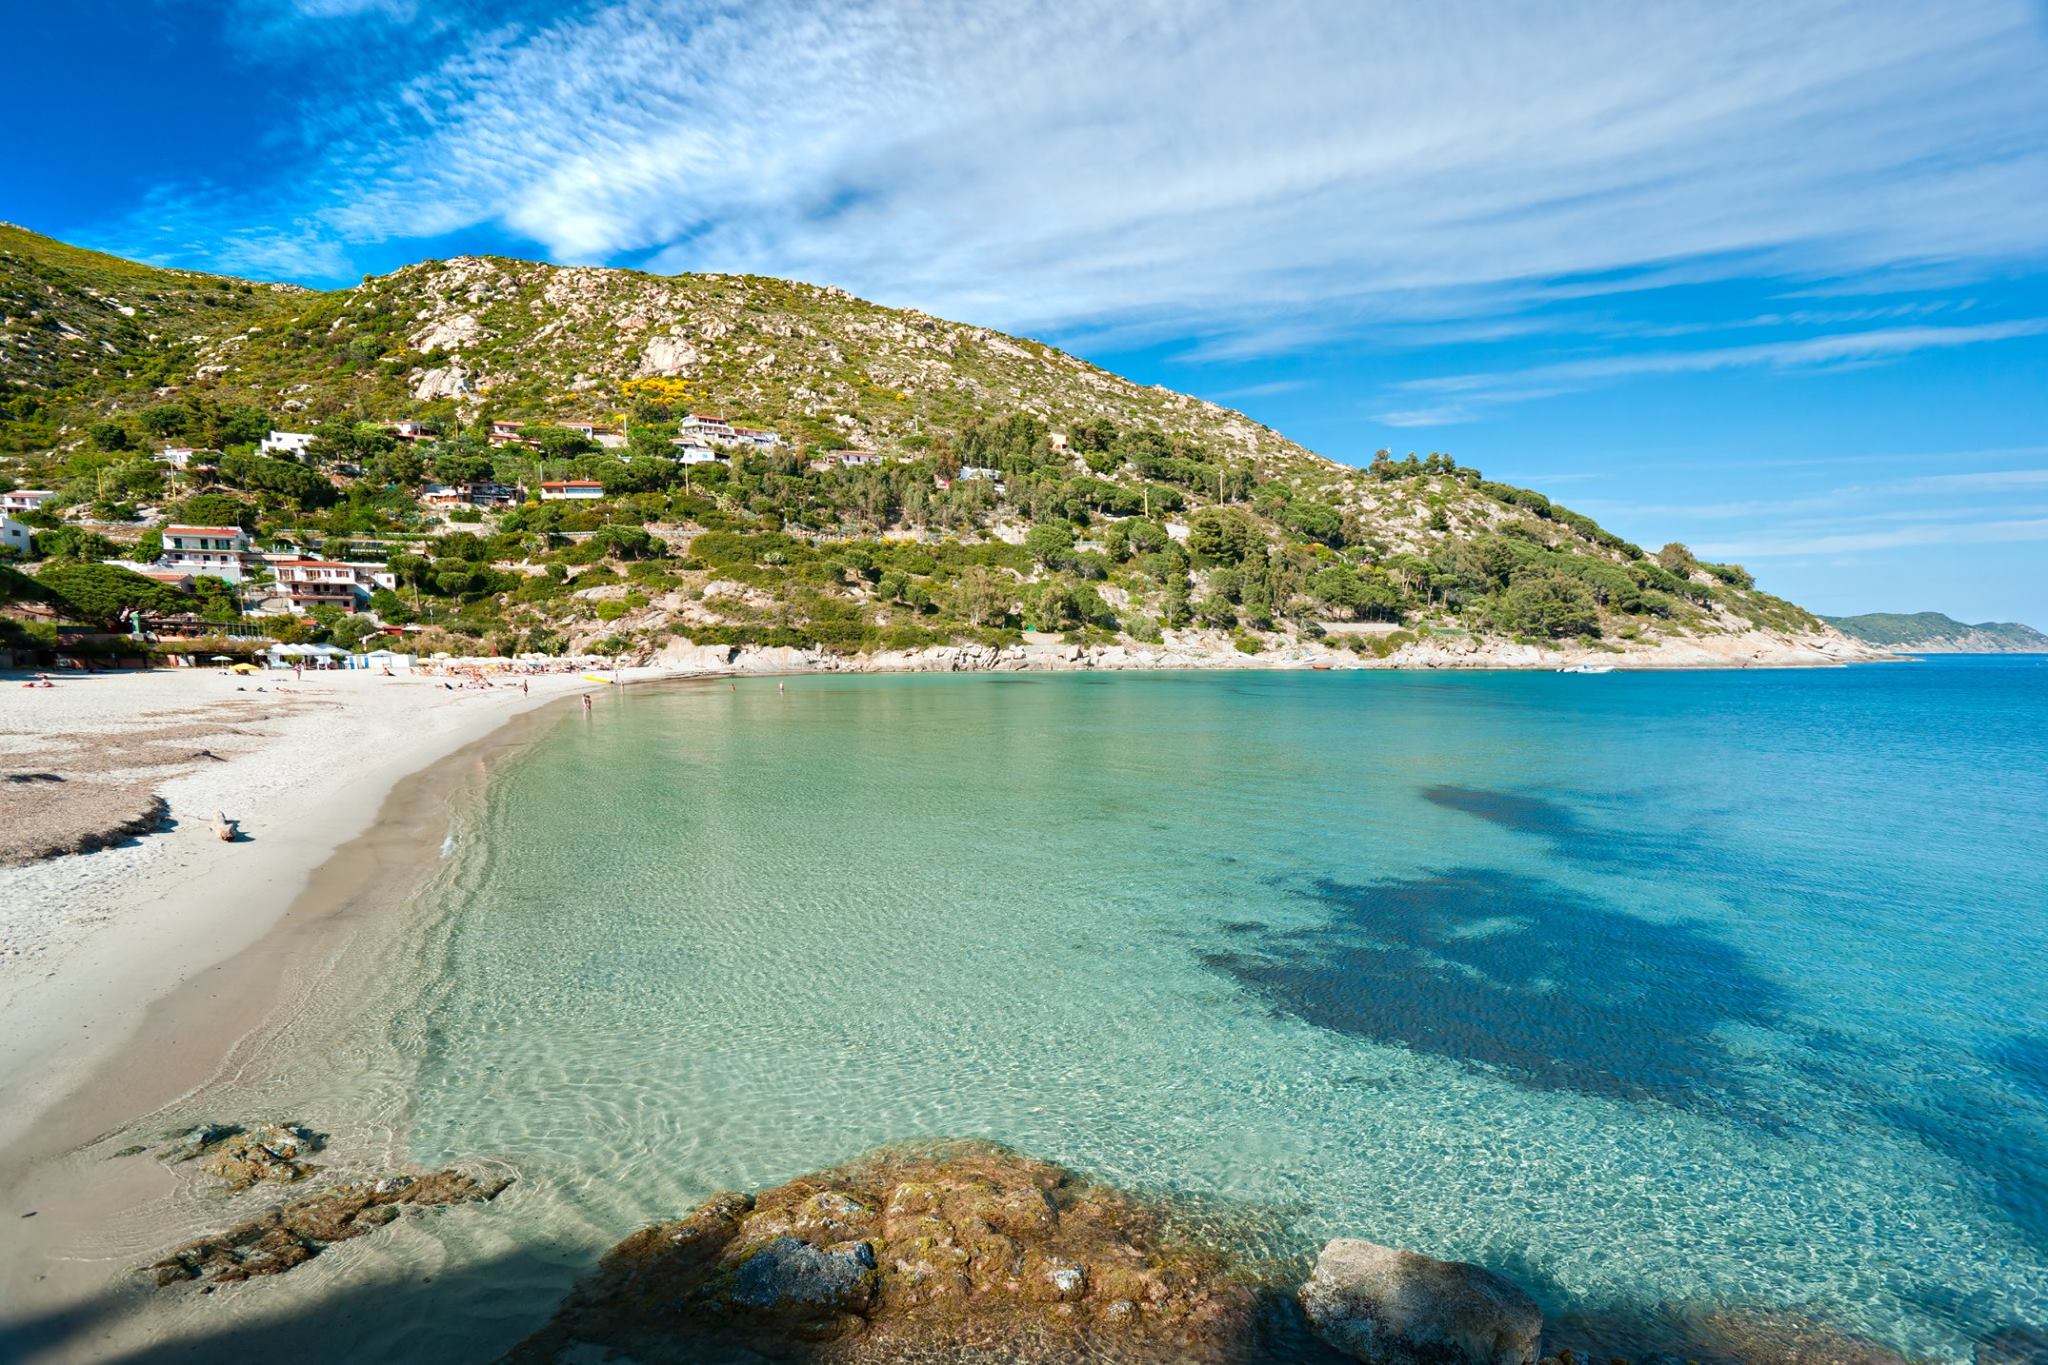 las mejores playas de italia, italia, calas, playas, best beachs, italy, las mejores playas, tourism, turismo, takemysecrets